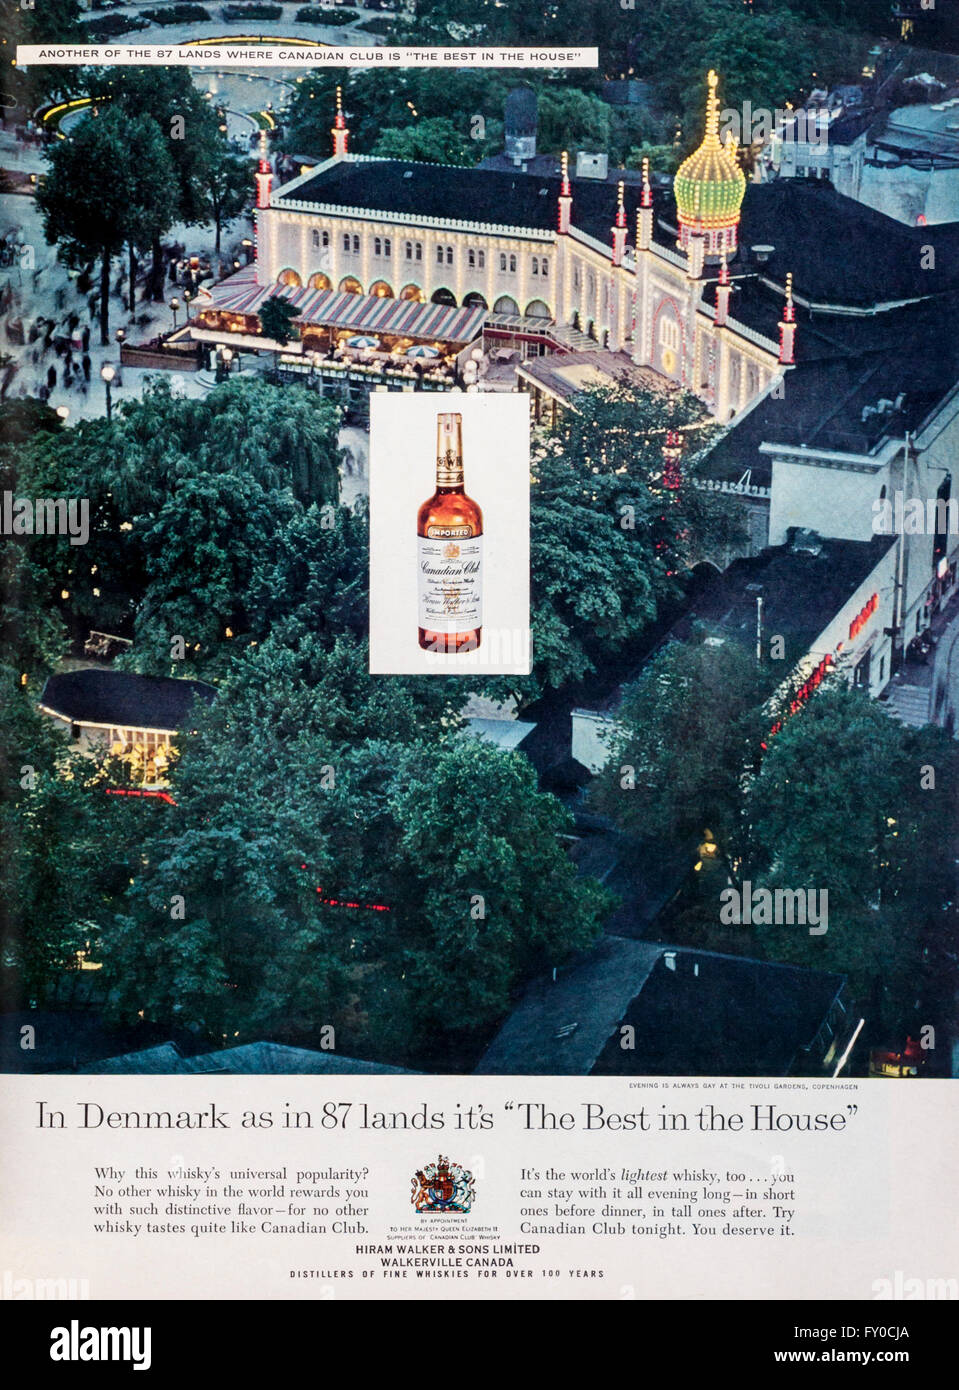 1960s magazine advertisement advertising Canadian Club whisky. Stock Photo